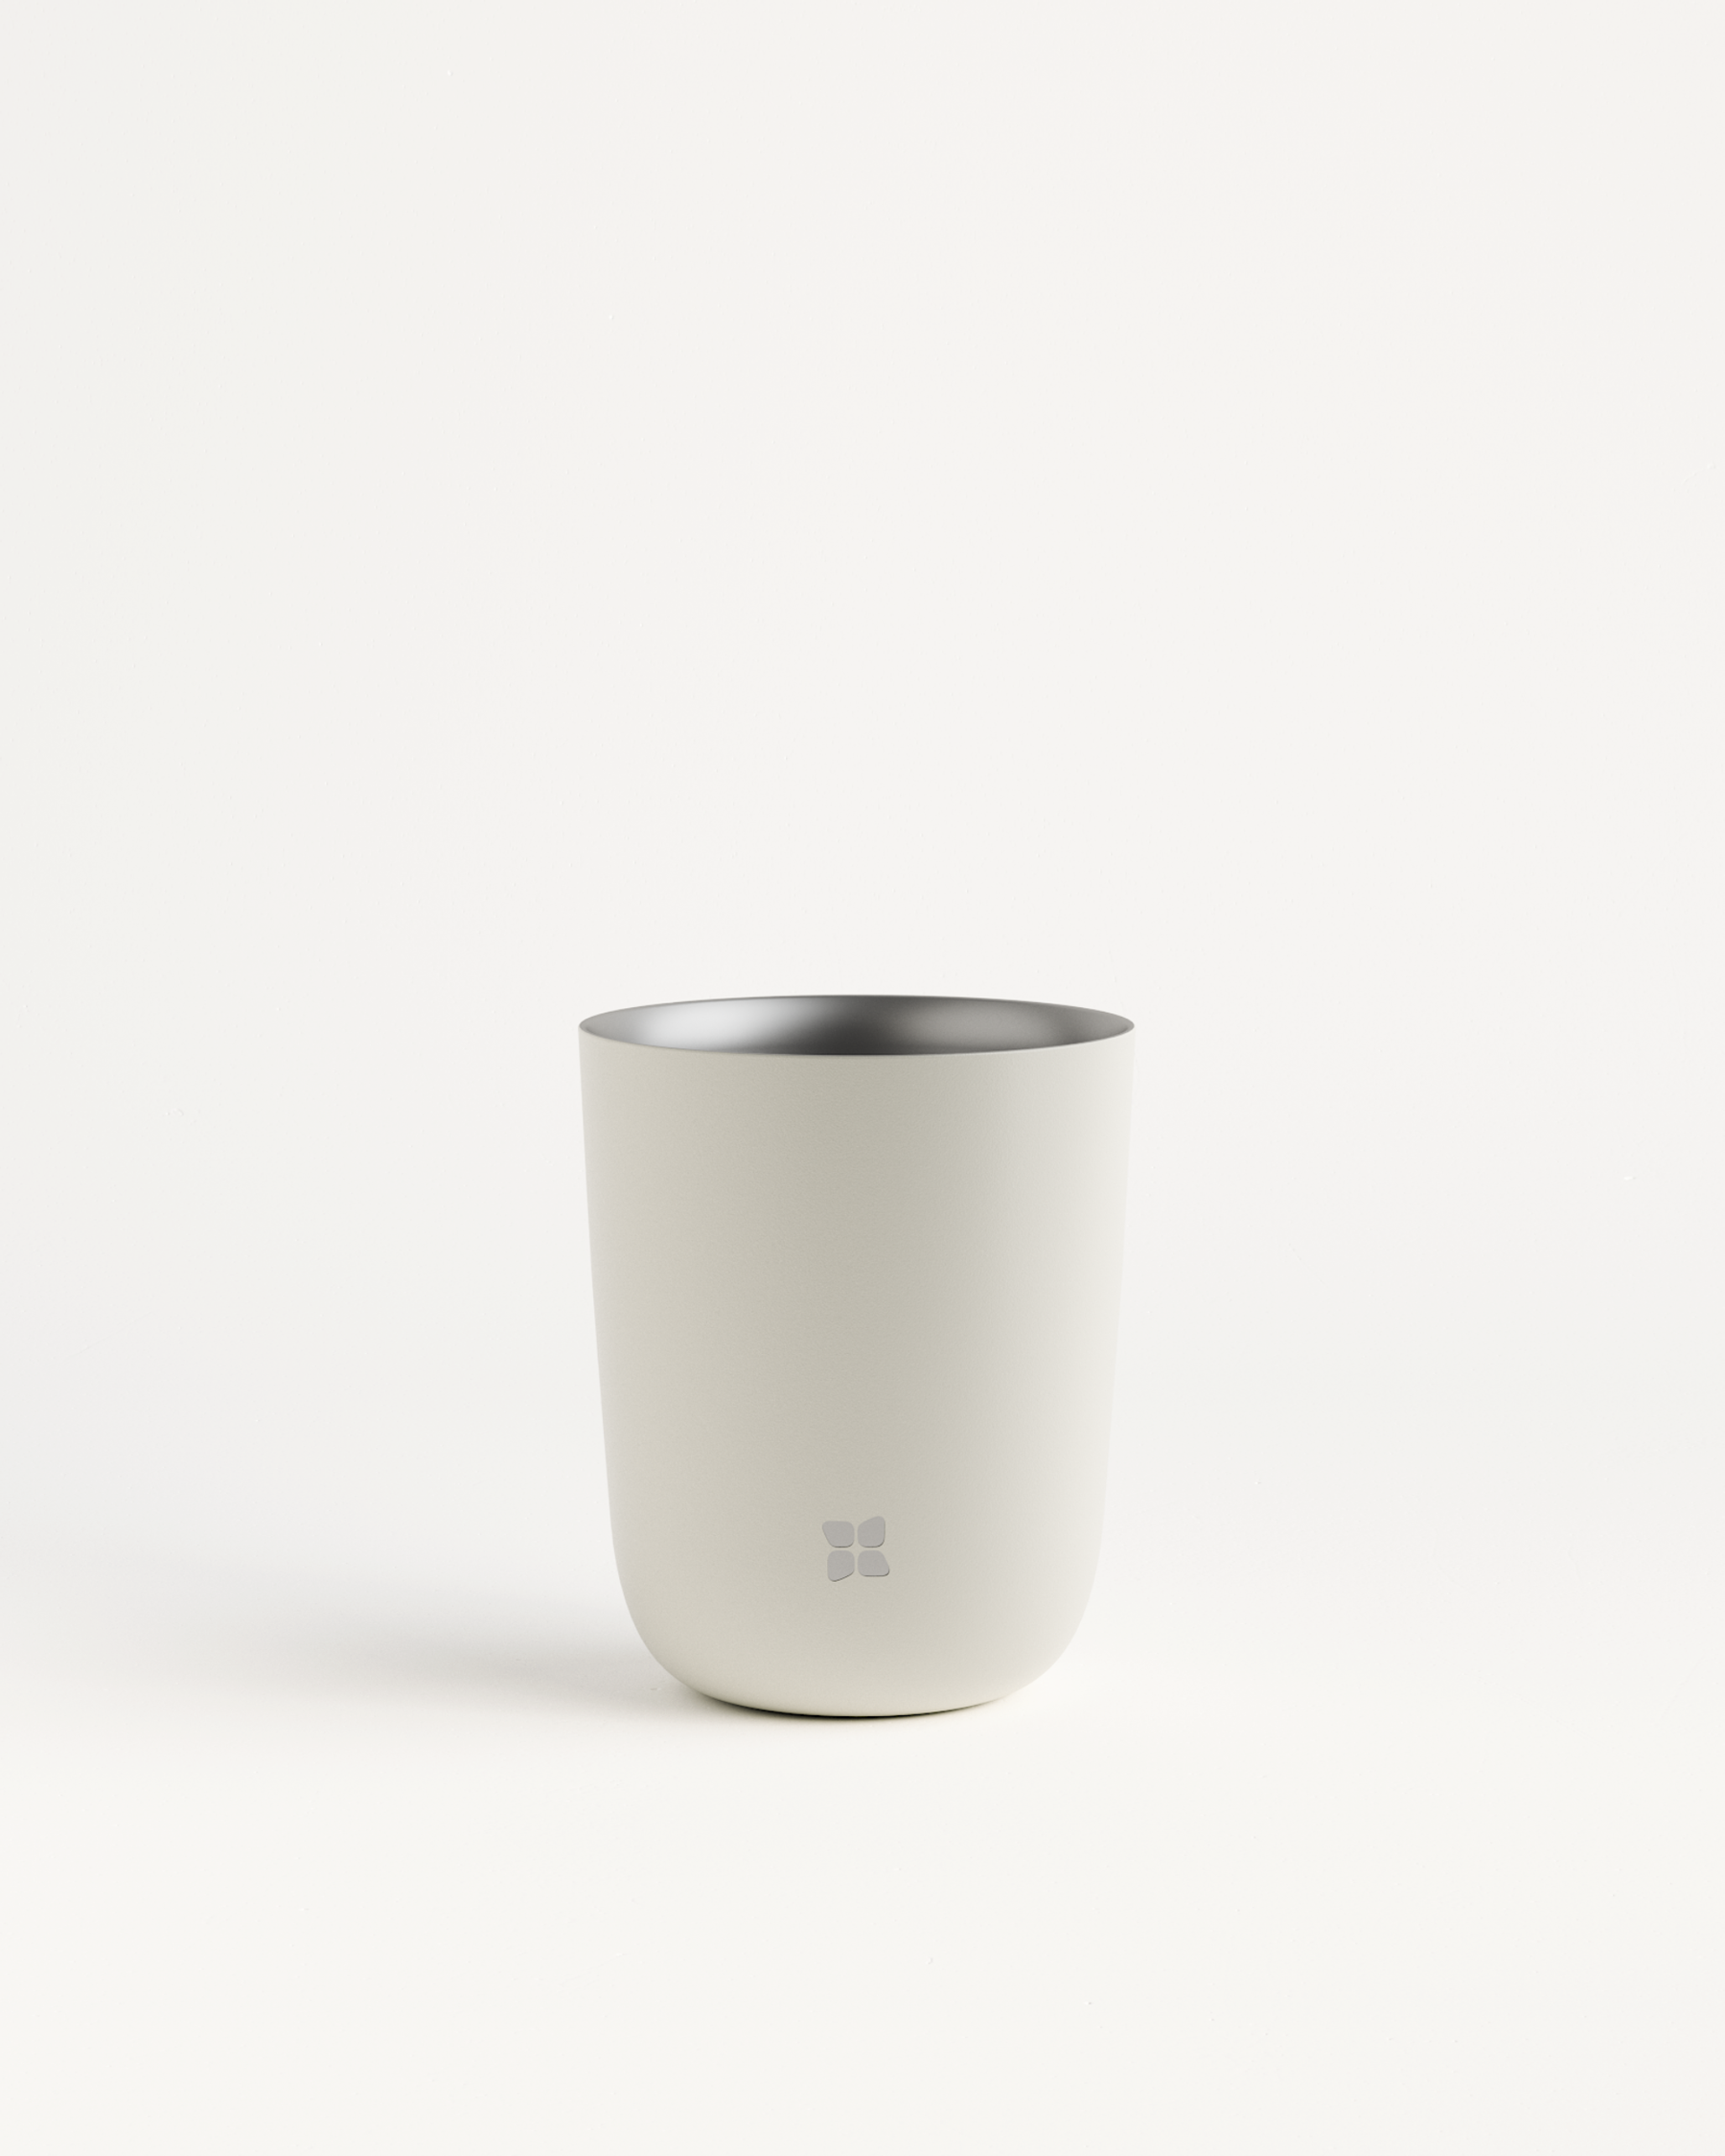 Waterdrop Steel Cup - Pastel Olive Matt - 12oz - Heat-Resistant Double-Walled Stainless Steel Cup